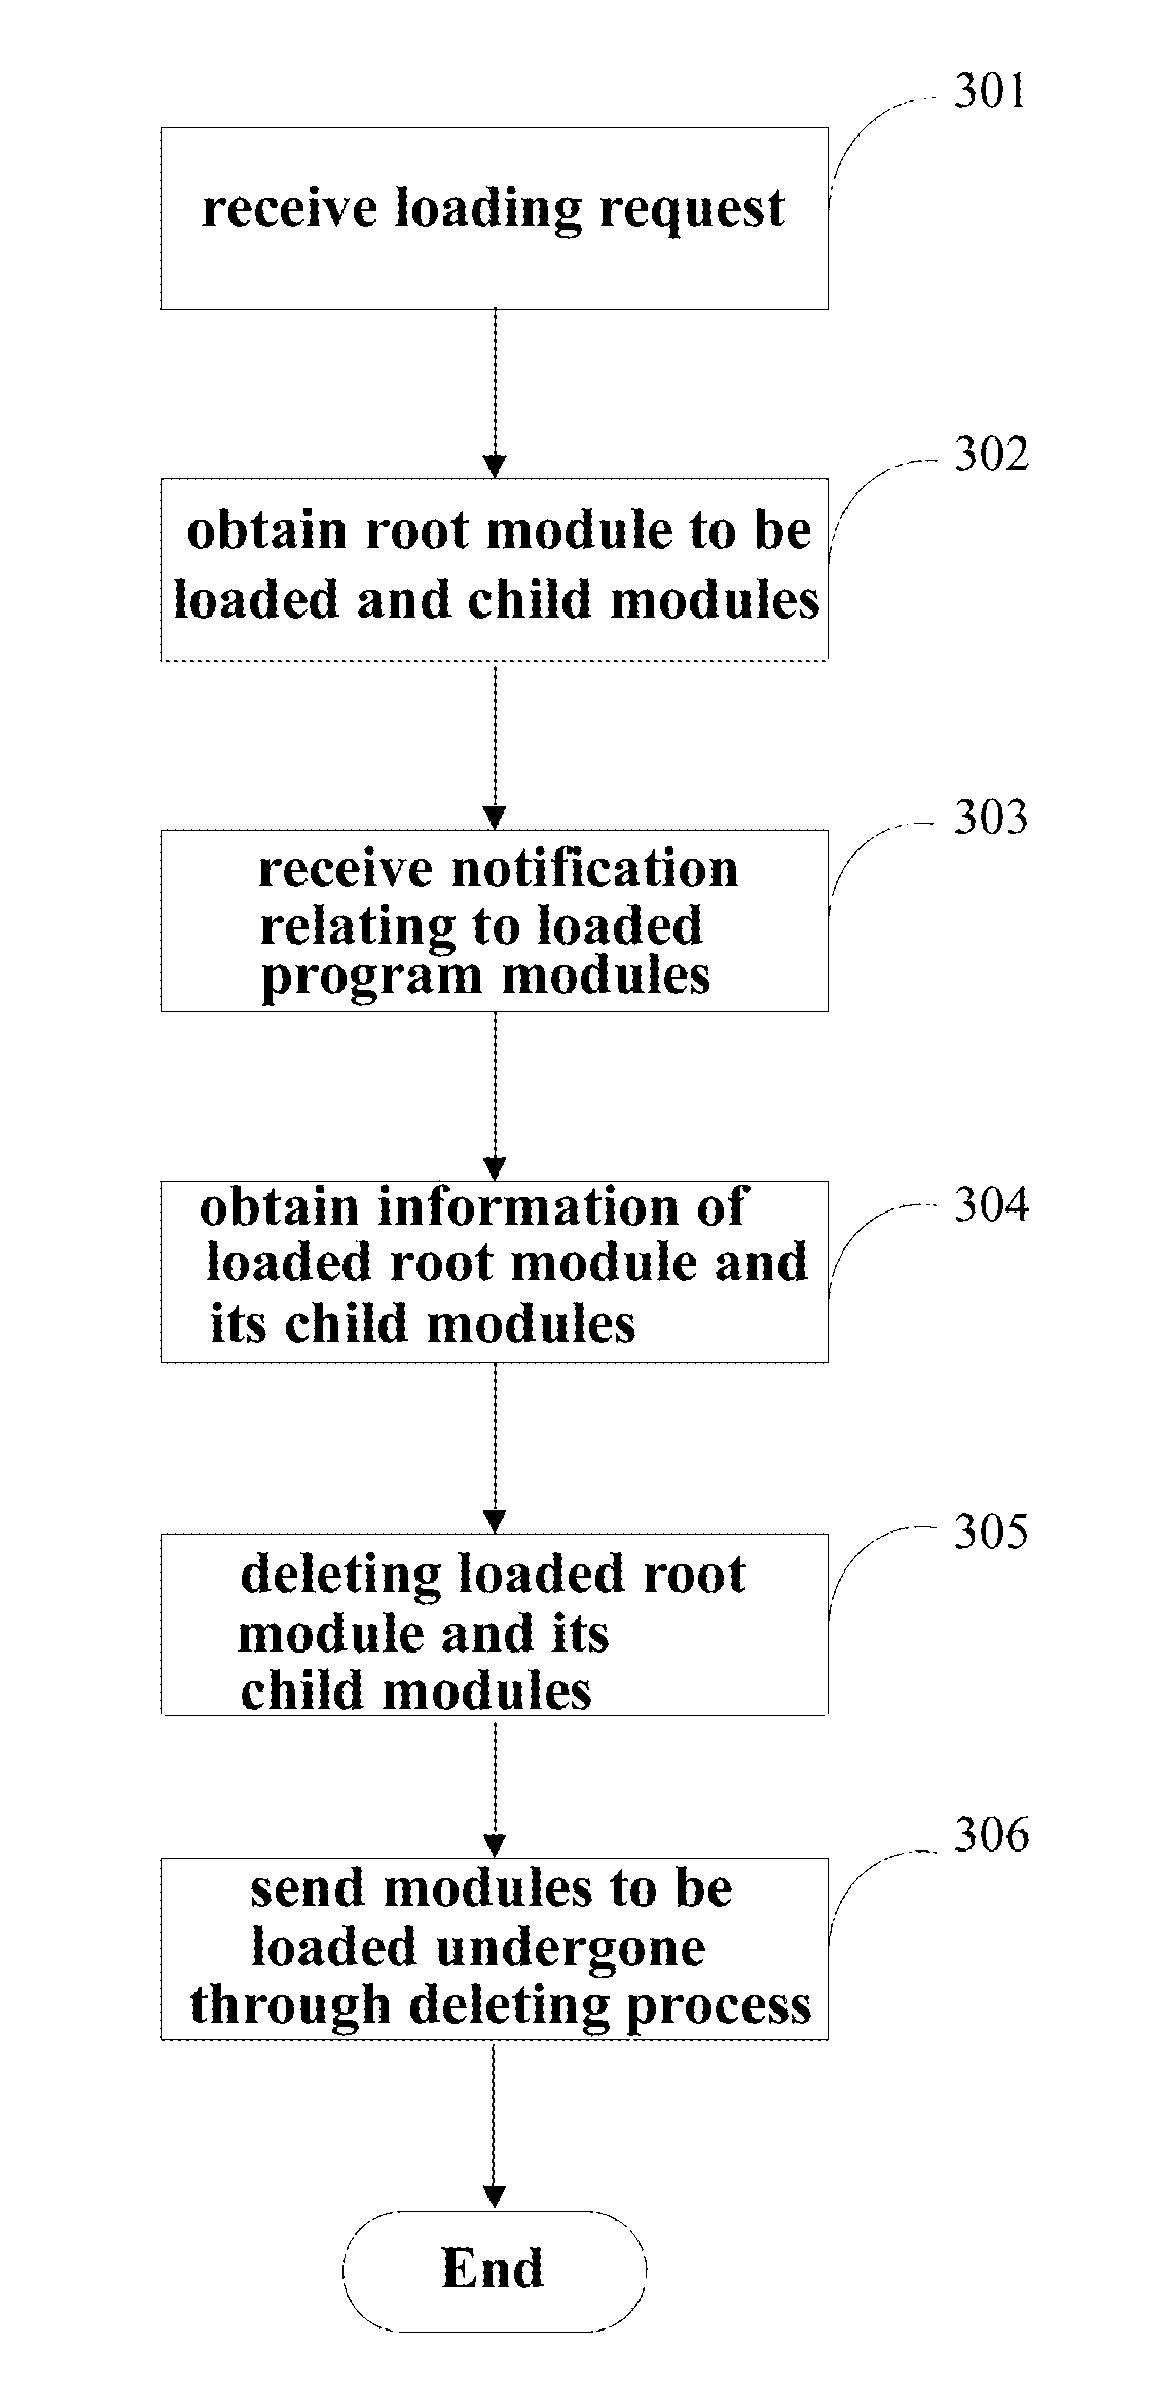 Loading program modules